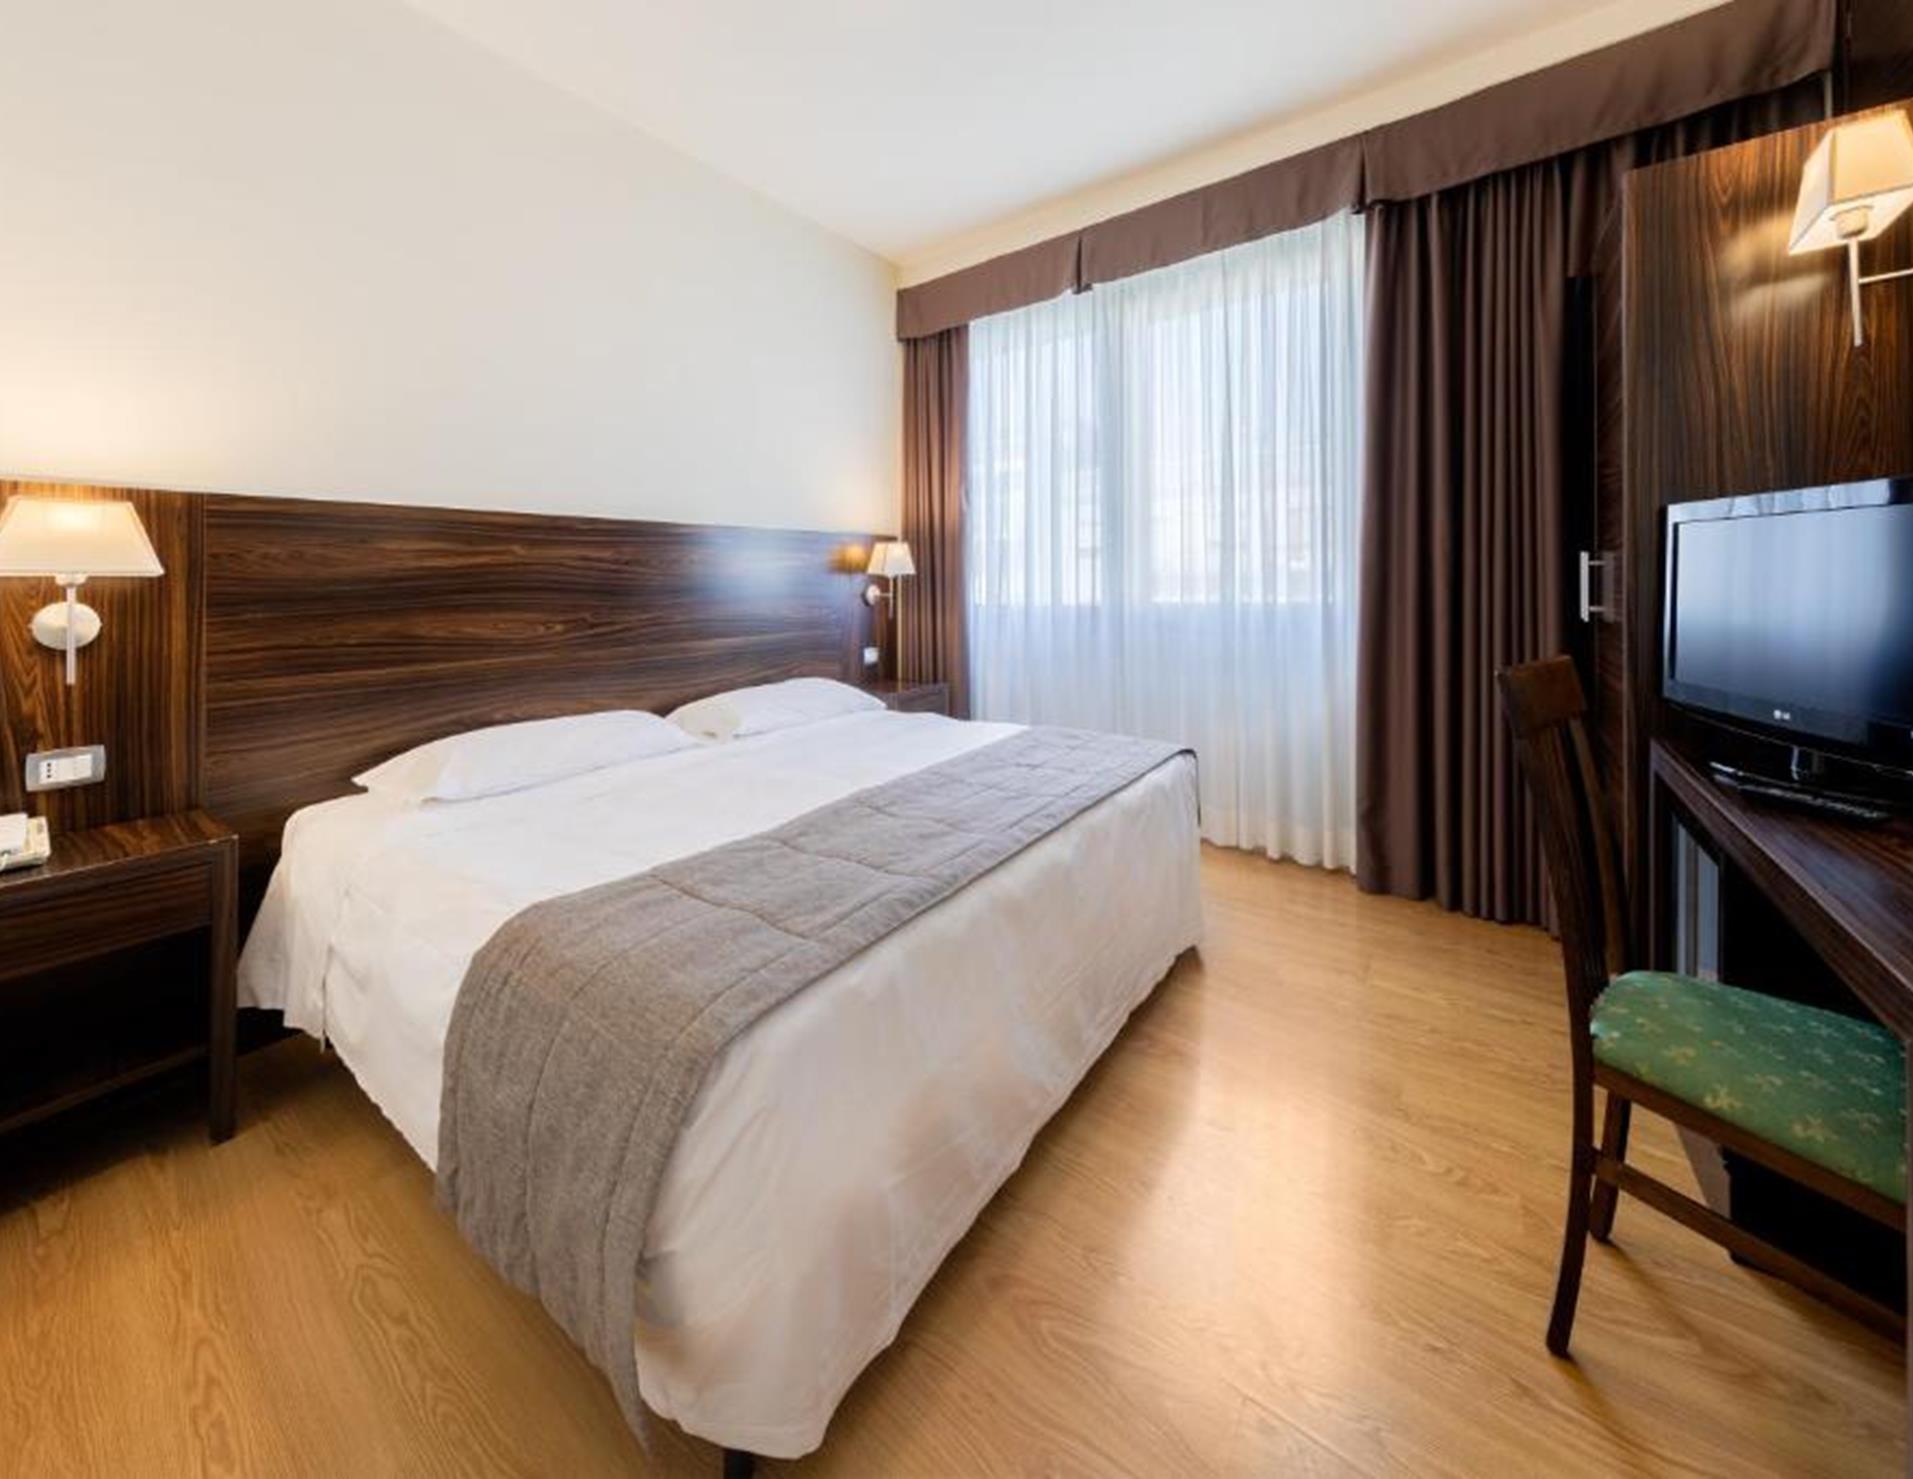 Quality Hotel Delfino - Room 9